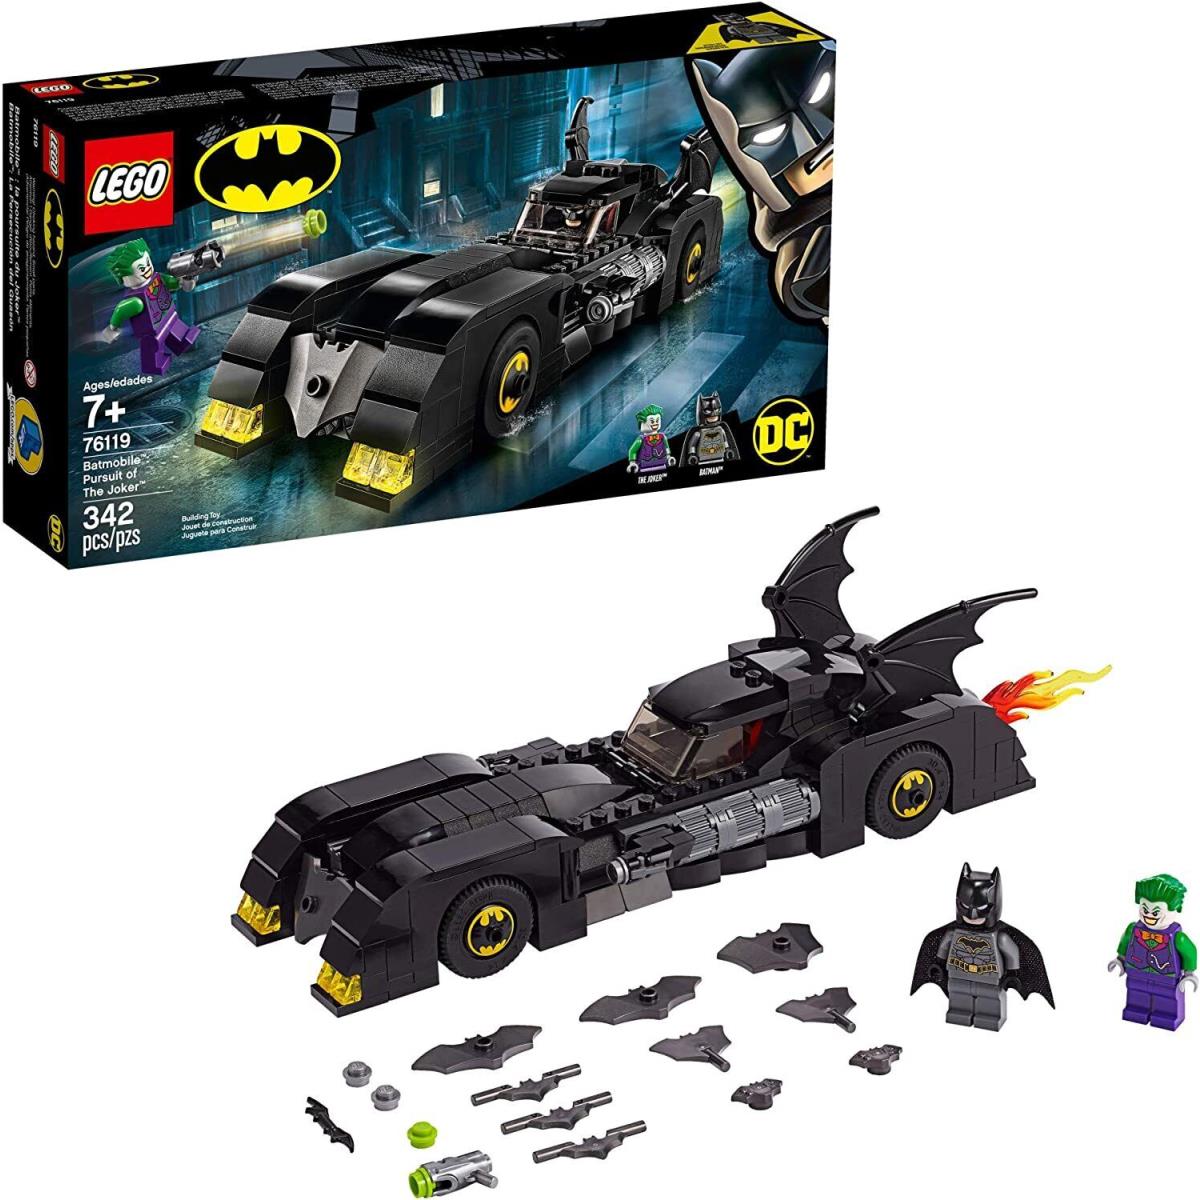 Lego 76119 Batmobile Pursuit of Joker